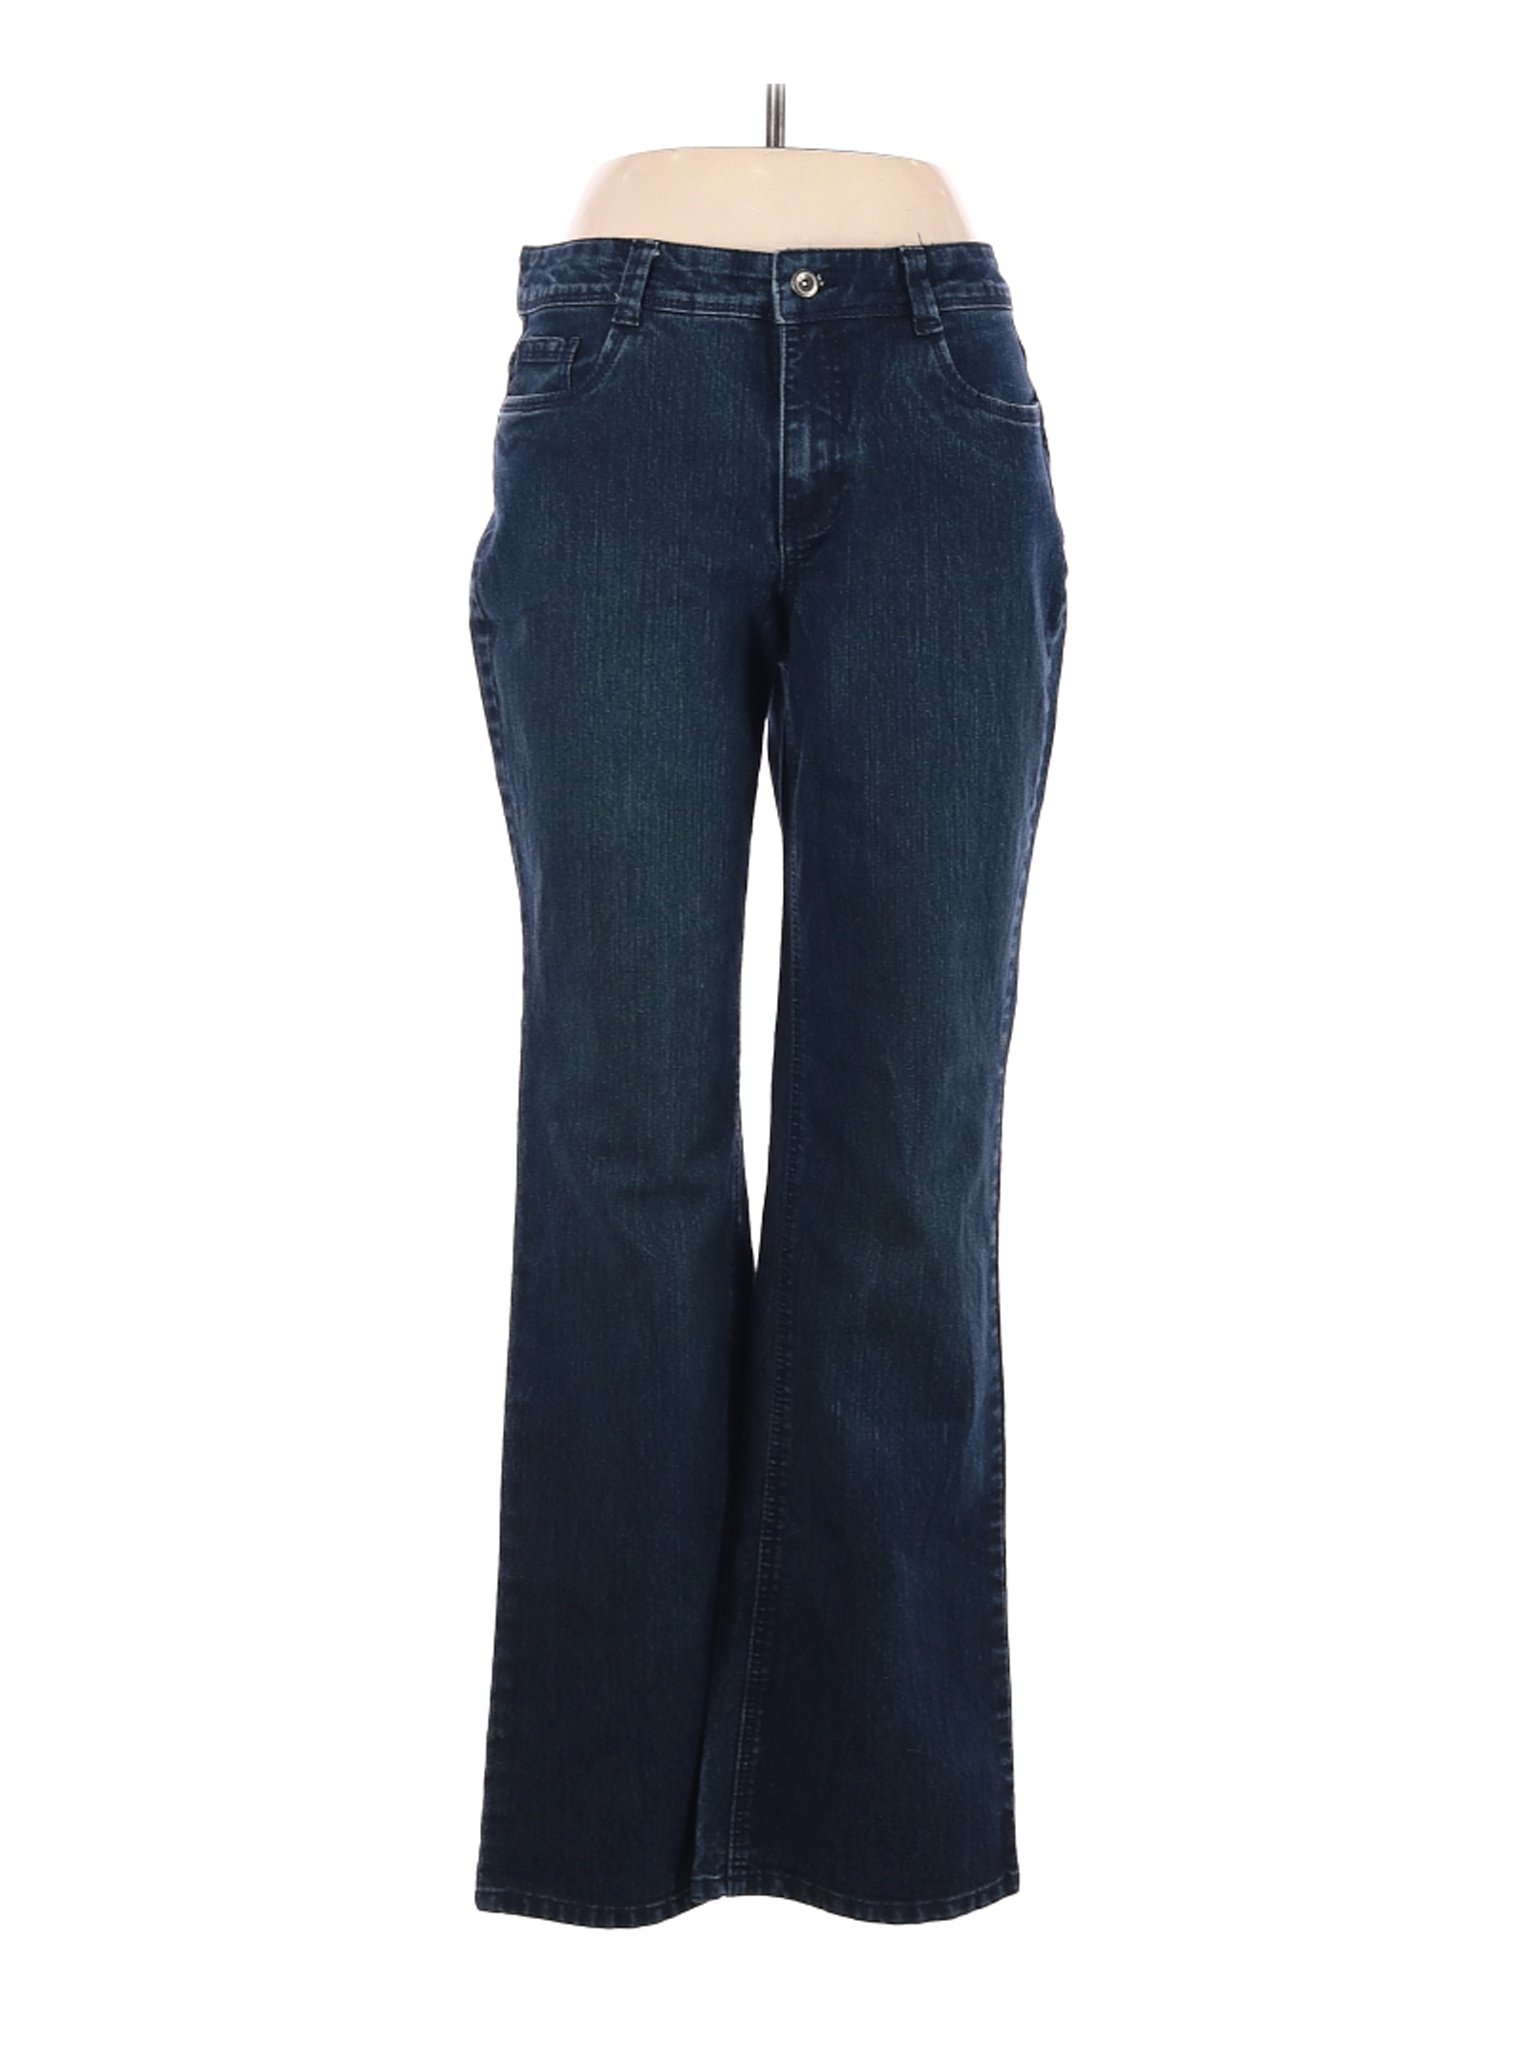 SONOMA life + style Women Blue Jeans 12 | eBay